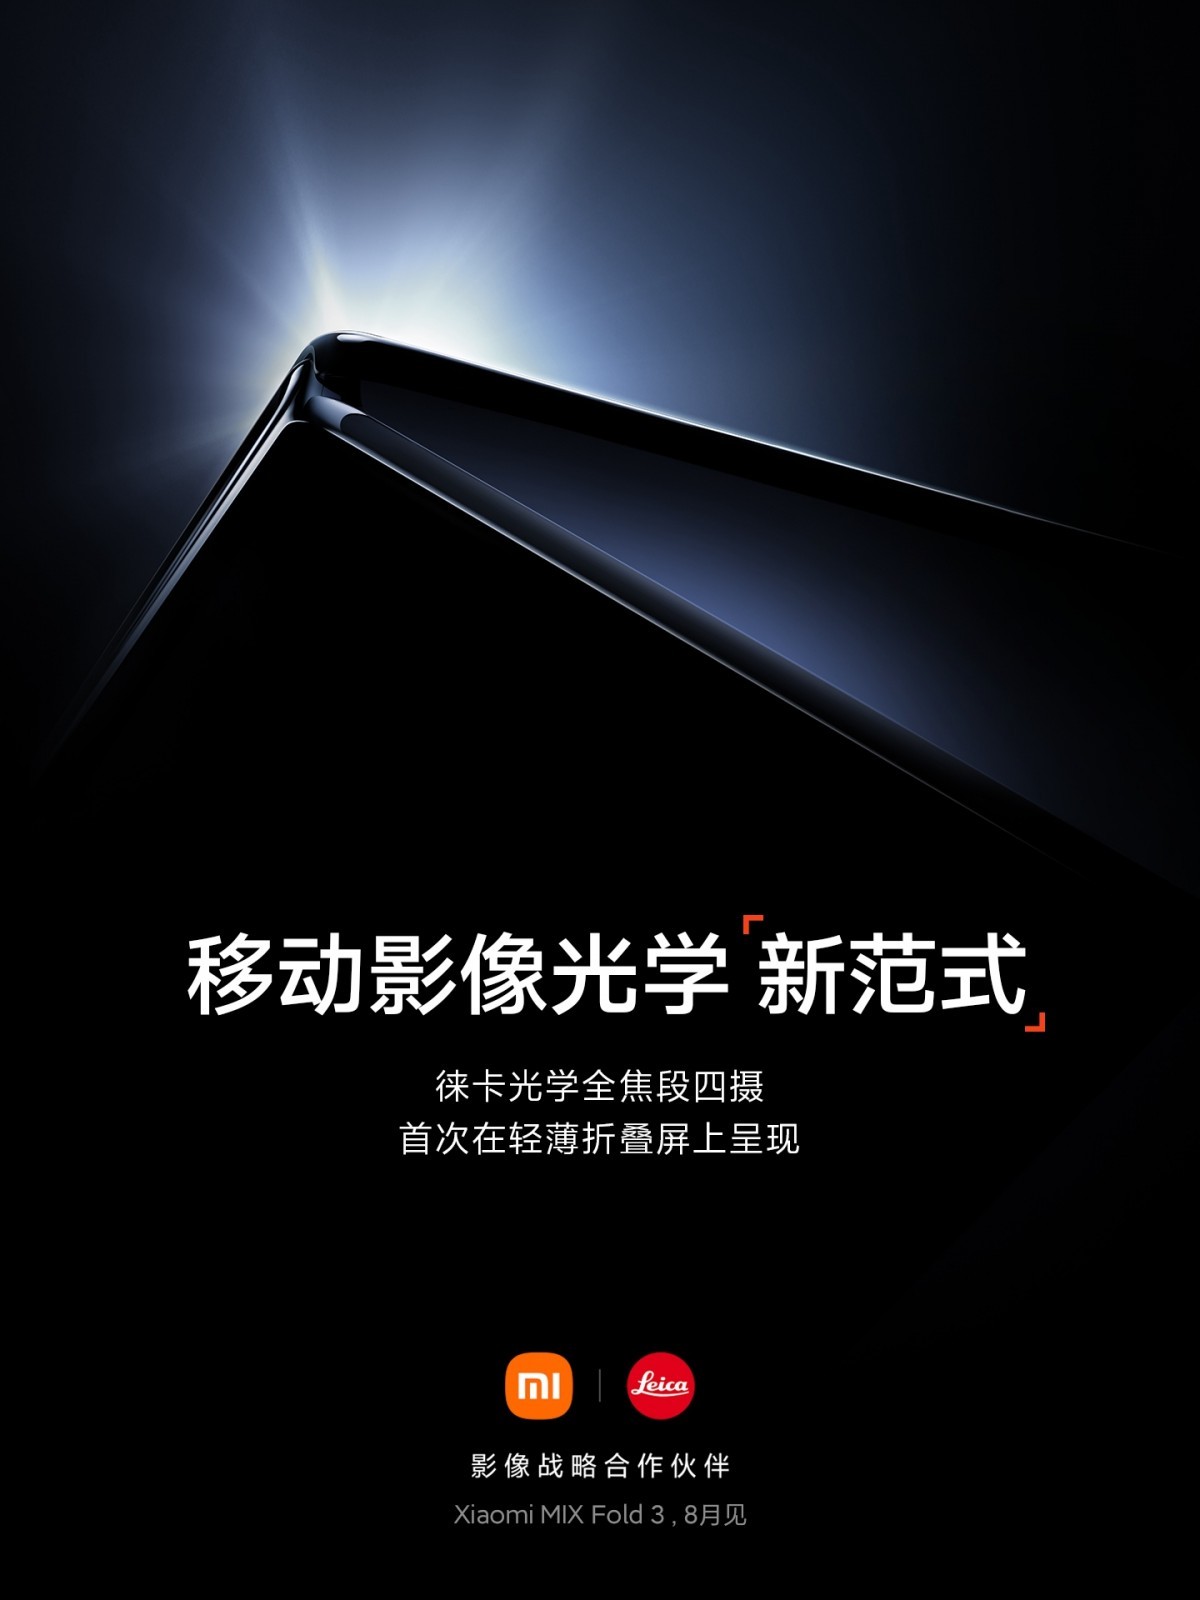 Xiaomi Mix Fold 3 banner Weibo